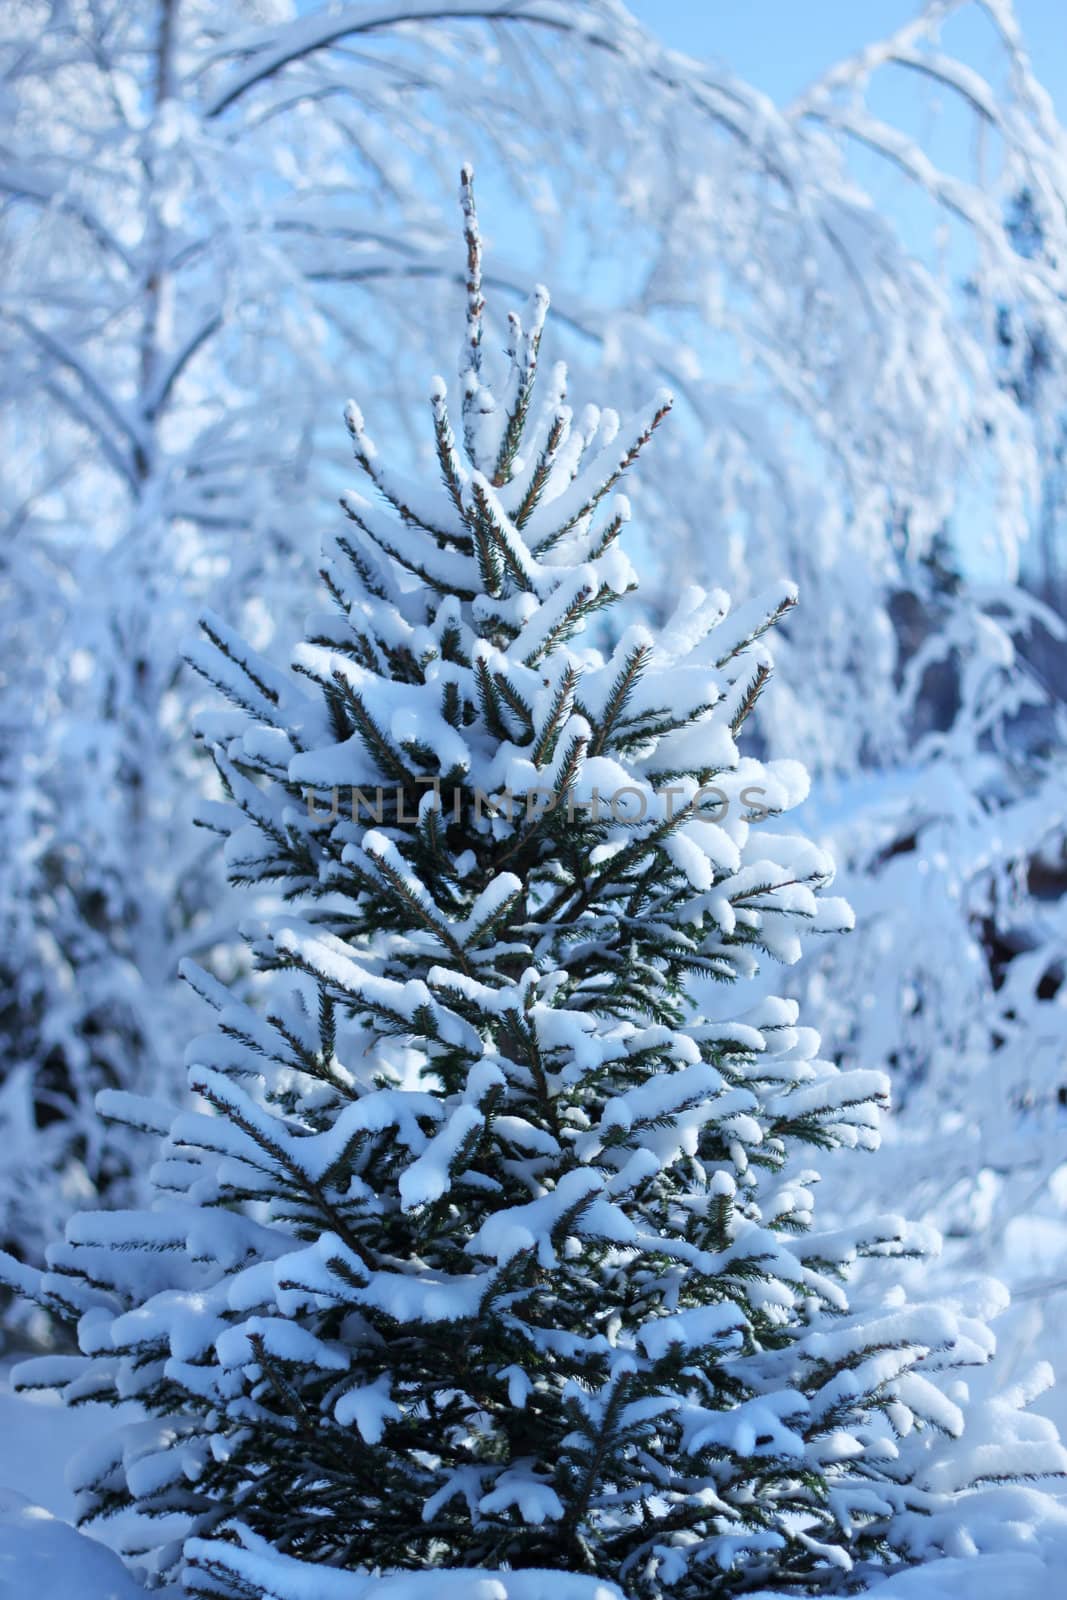 Snowy evergreen fir tree spruce in winter forest background